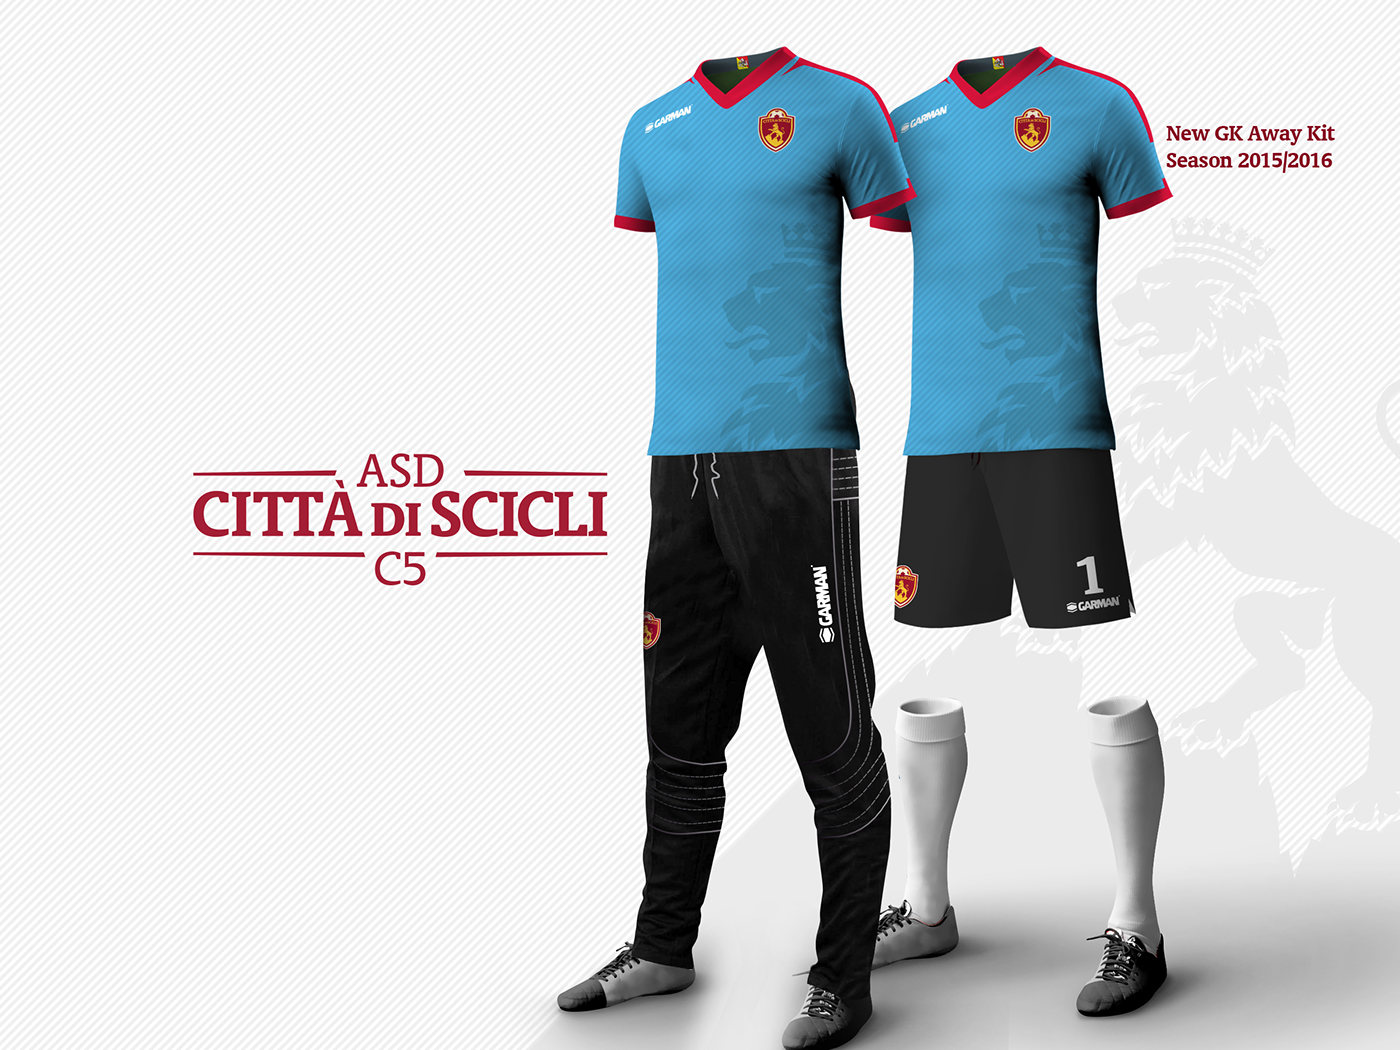 kit uniform italia Italy futebol soccer new kit camiseta time futsal